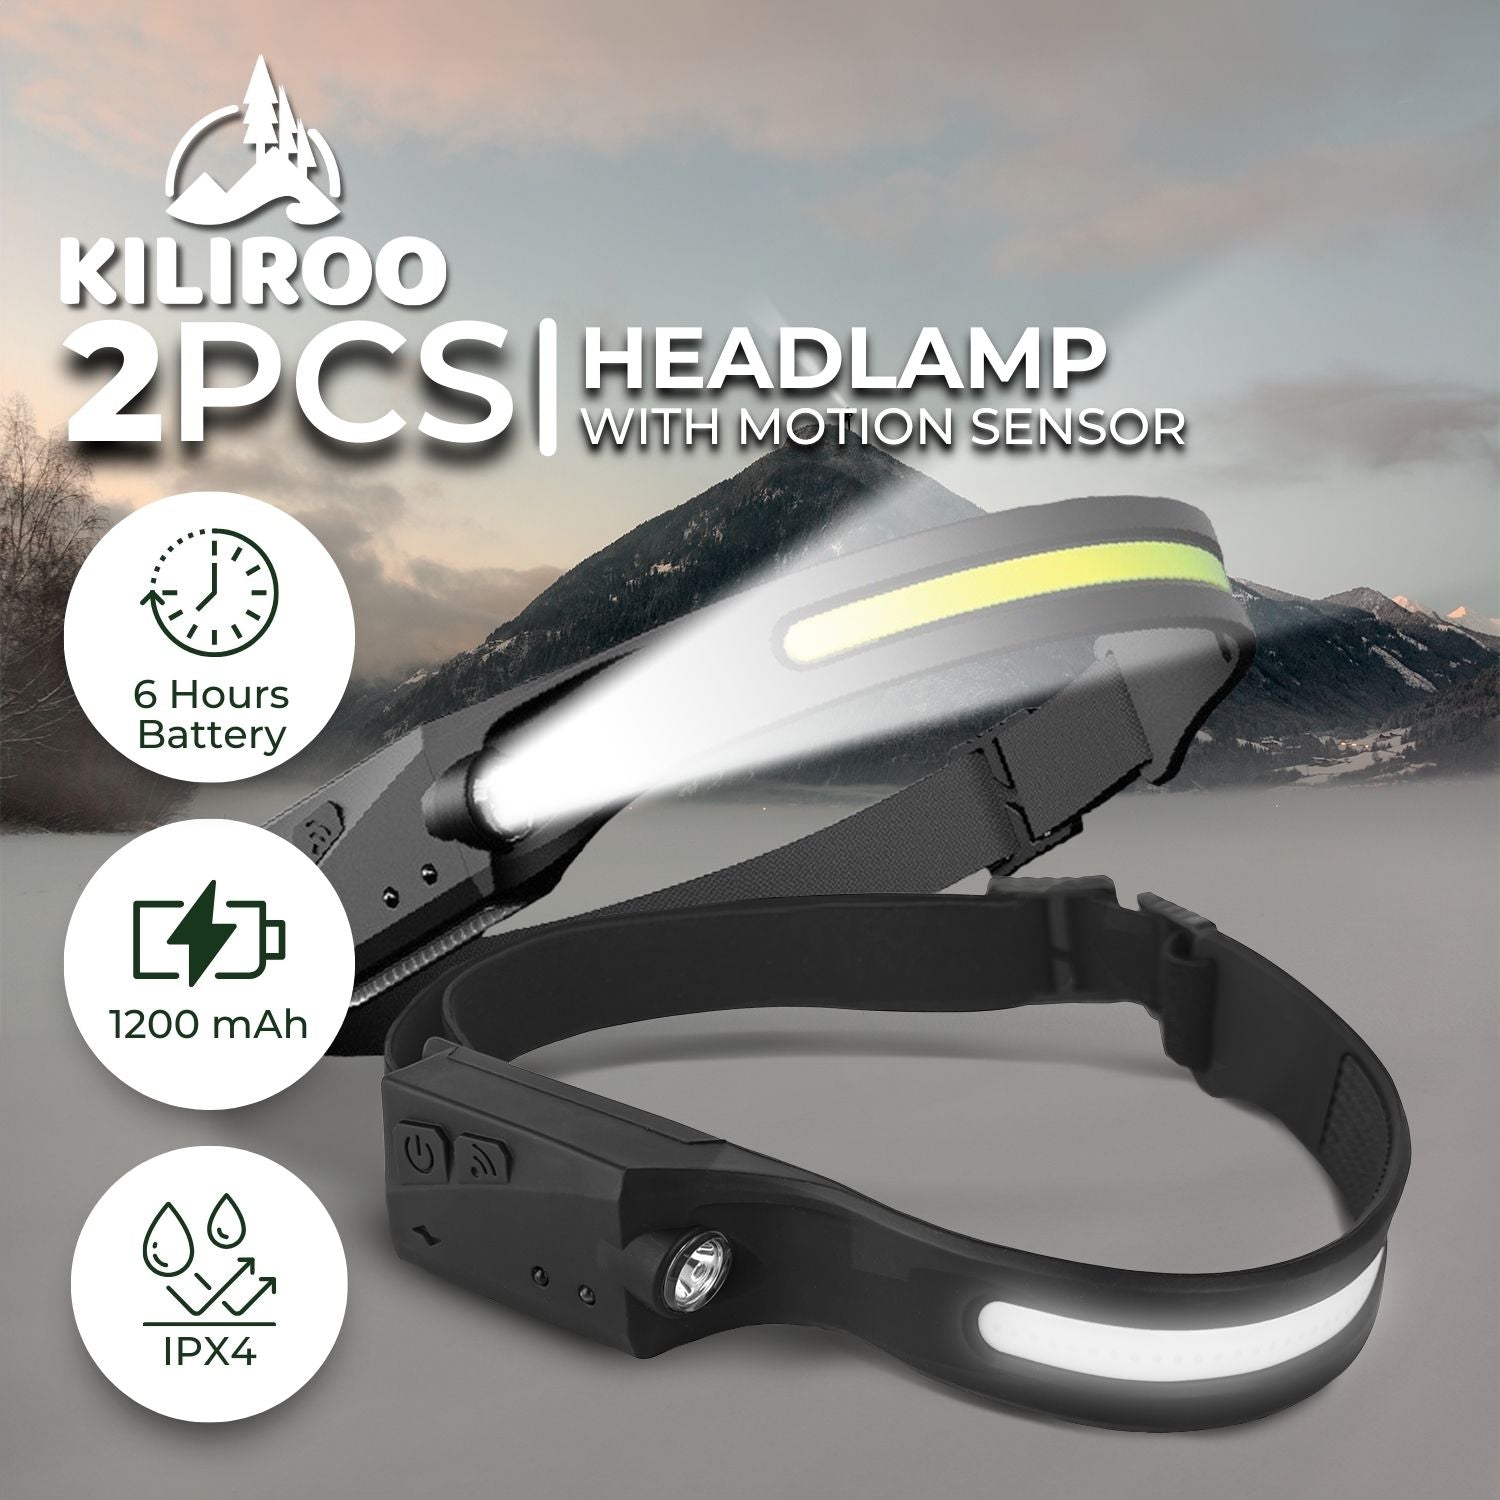 KILIROO 2PCS LED Rechargeable Headlamp with Motion Sensor (Black and Yellow)